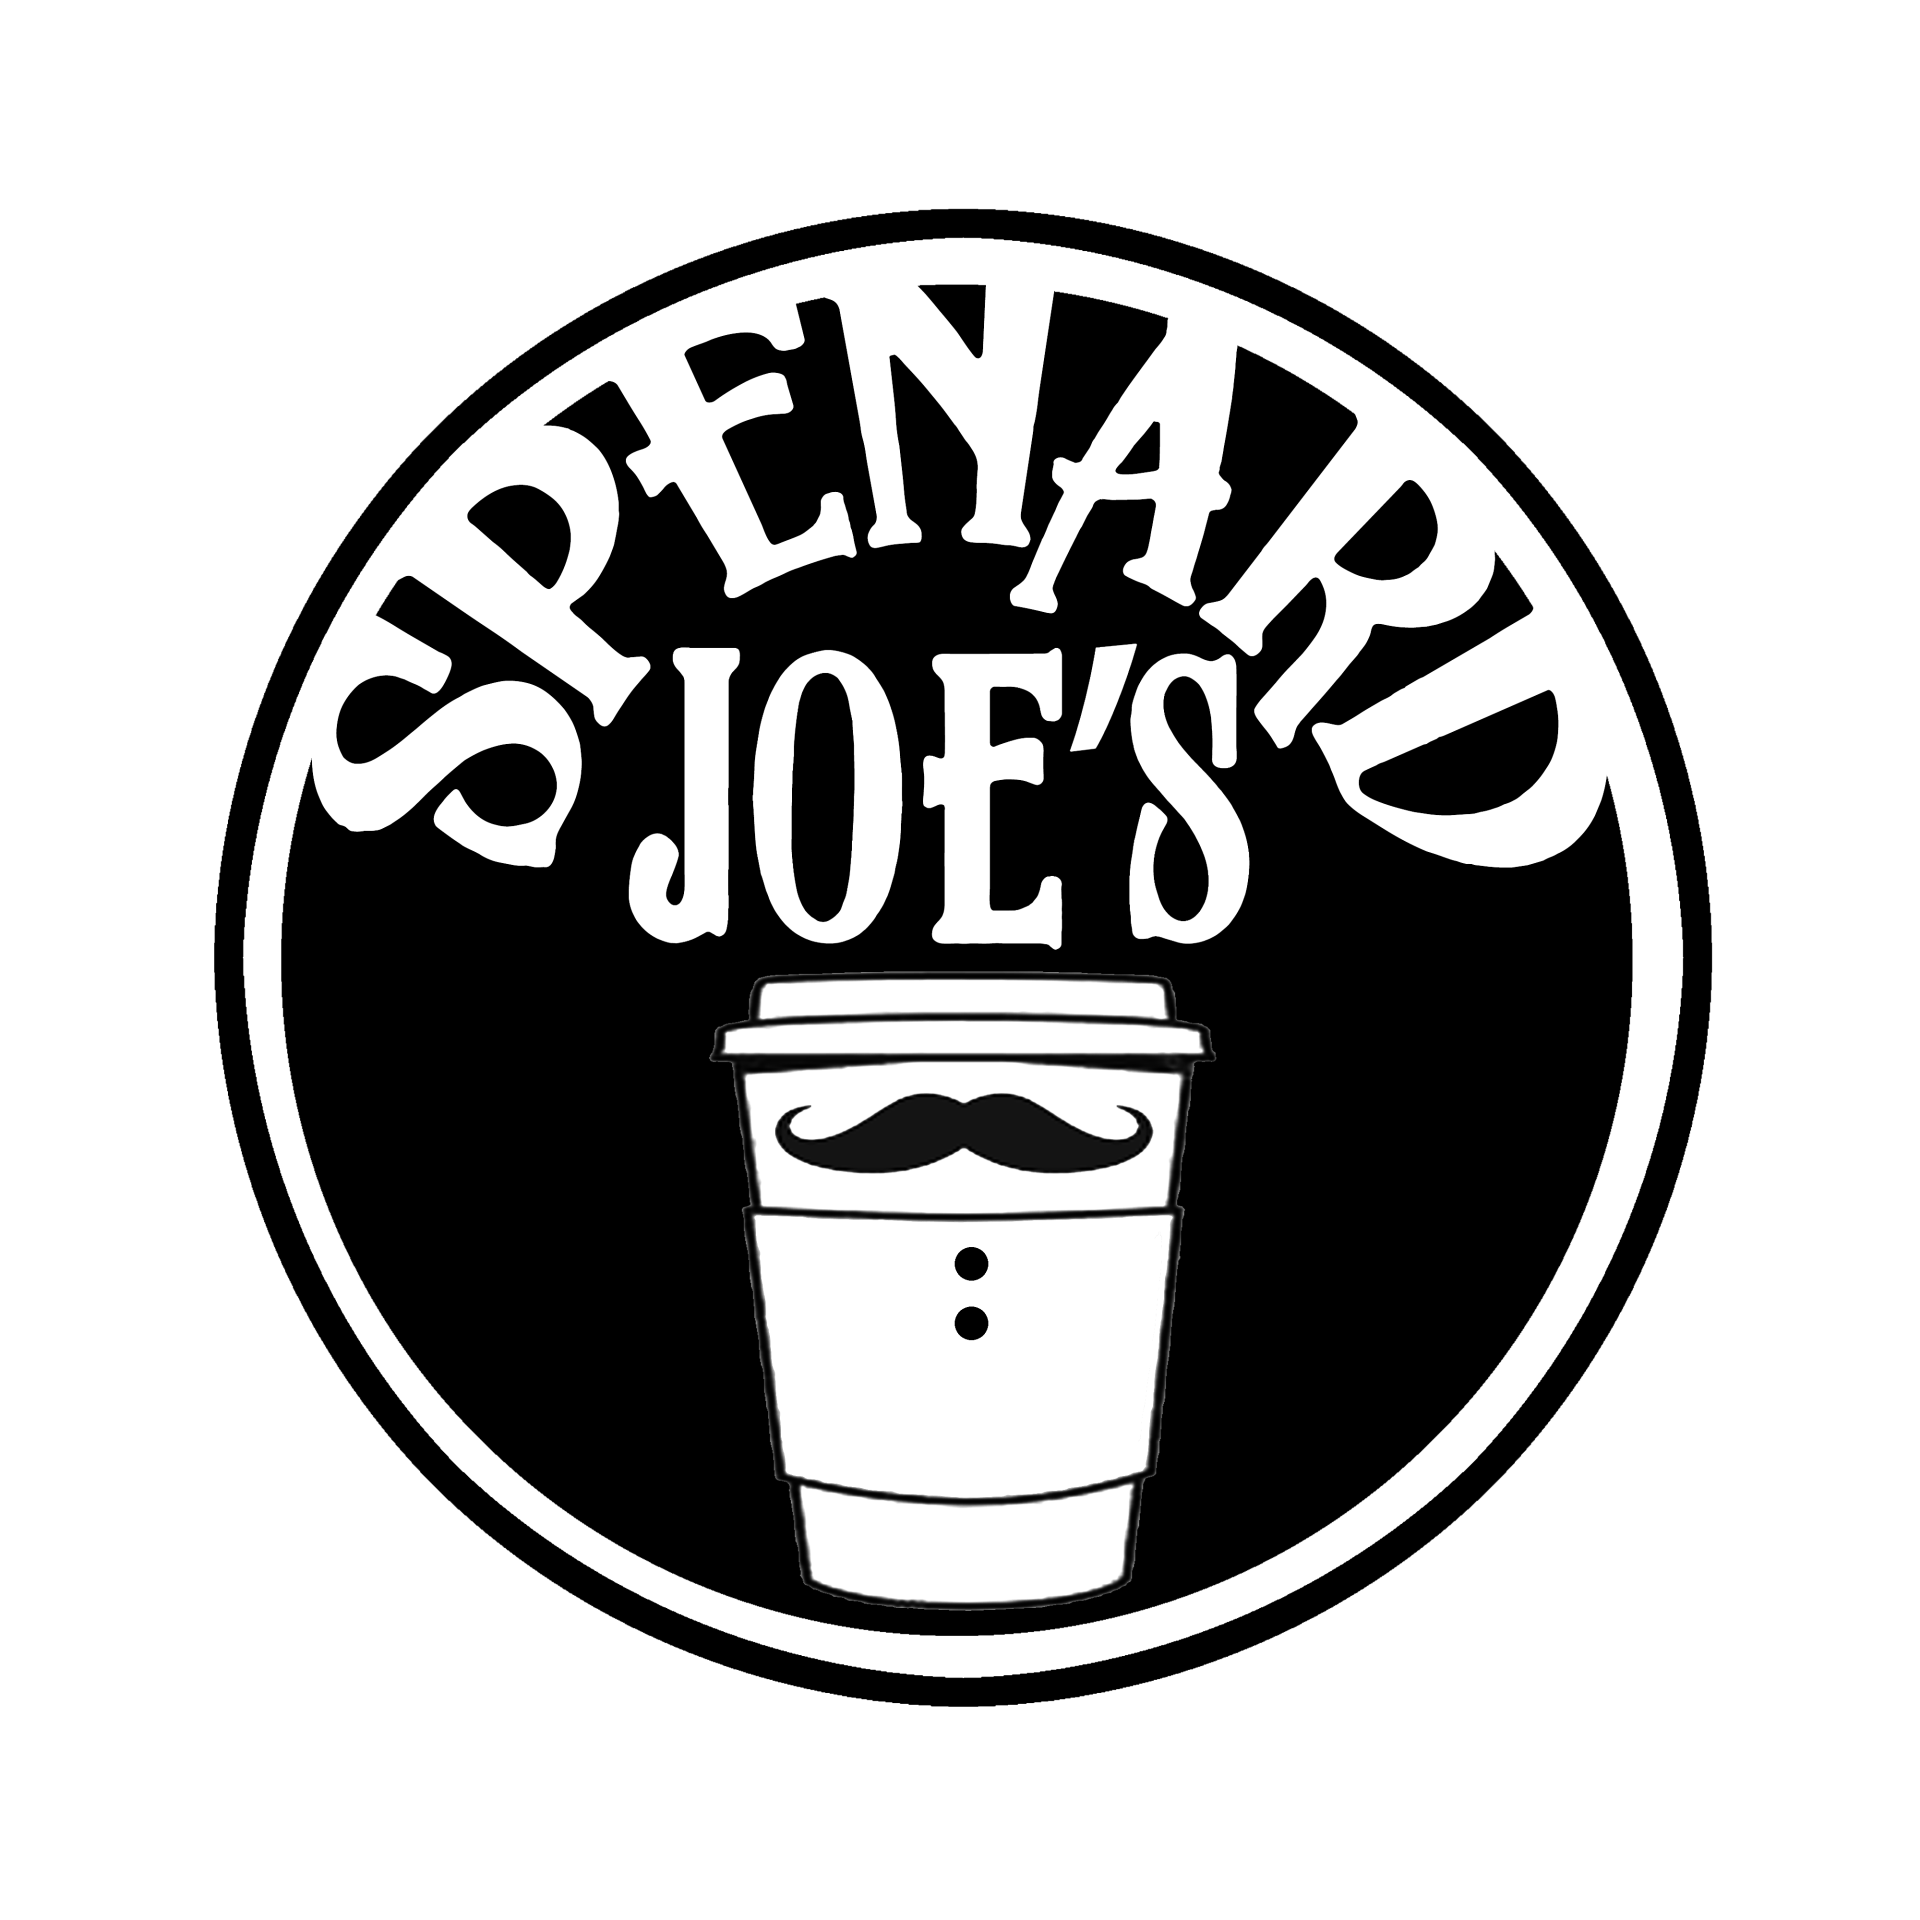 Spenard Joe's